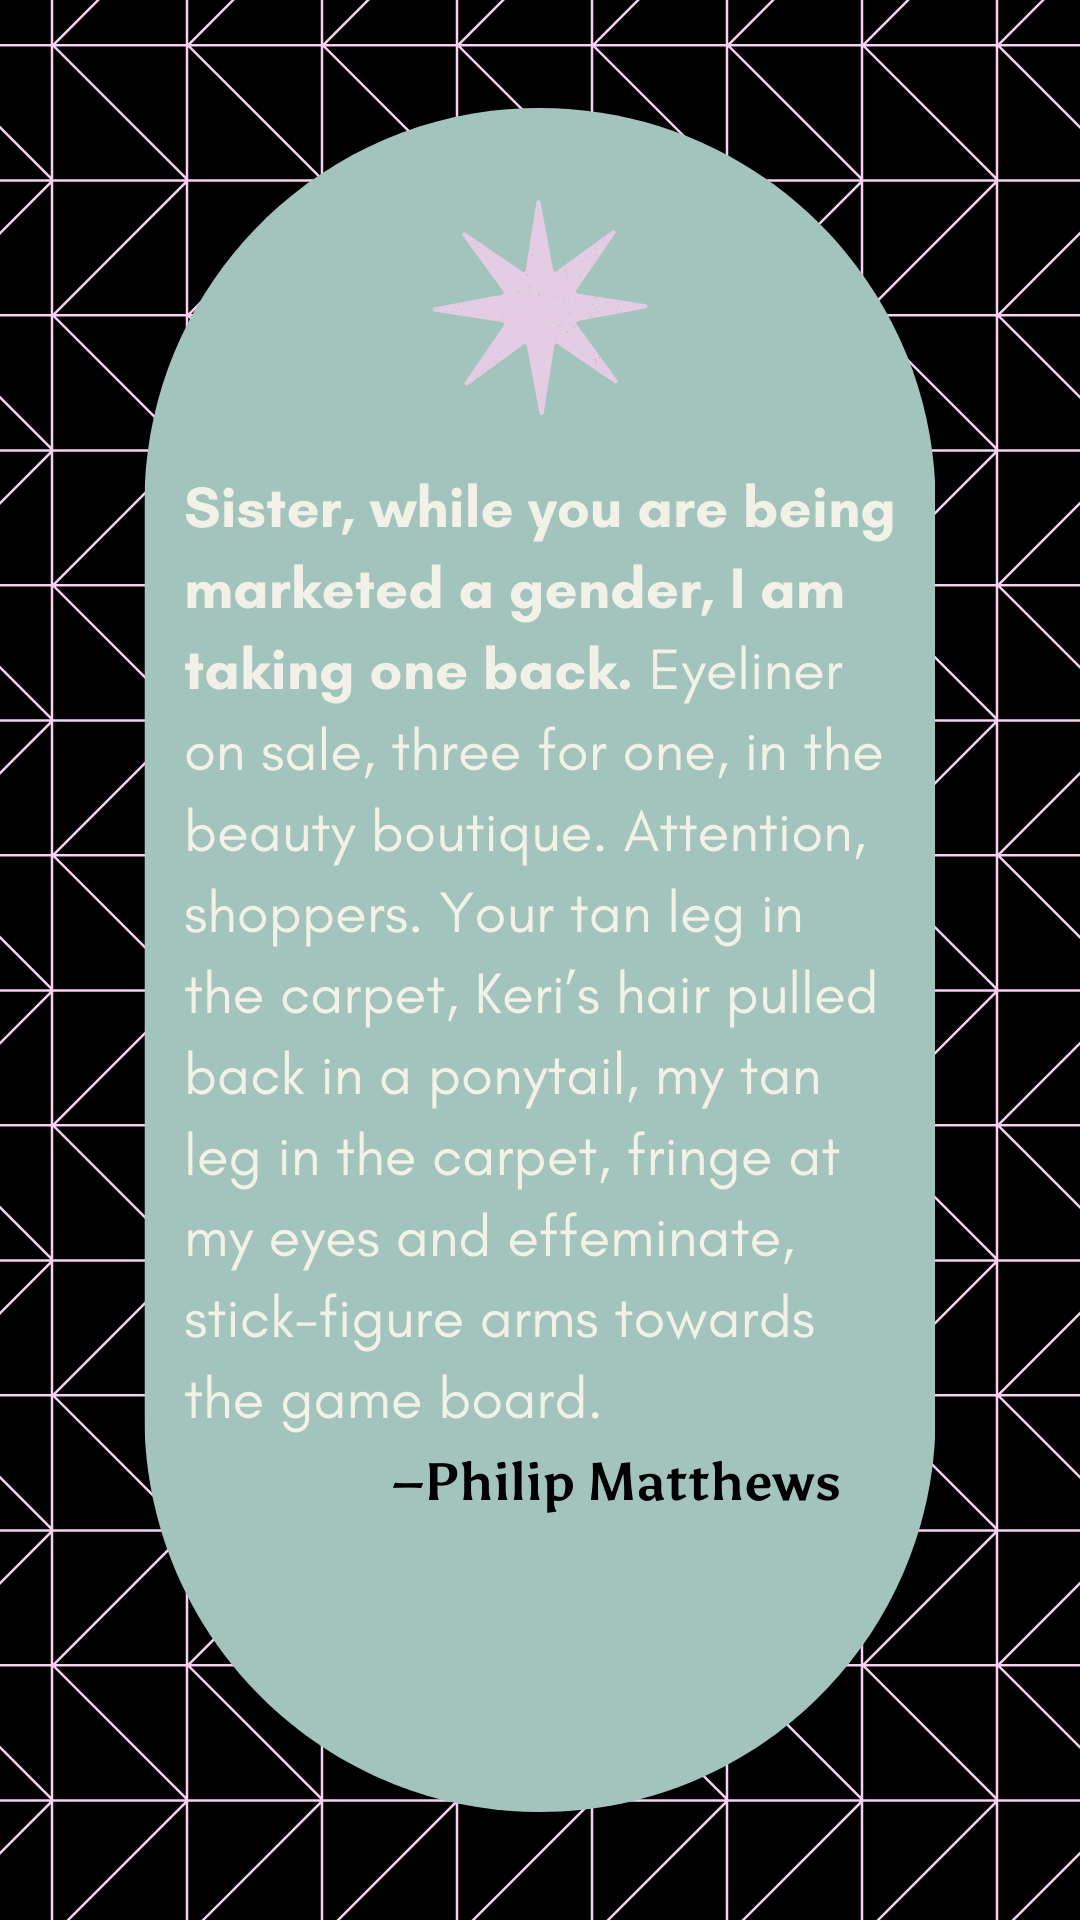 Phillip Matthews Story.png